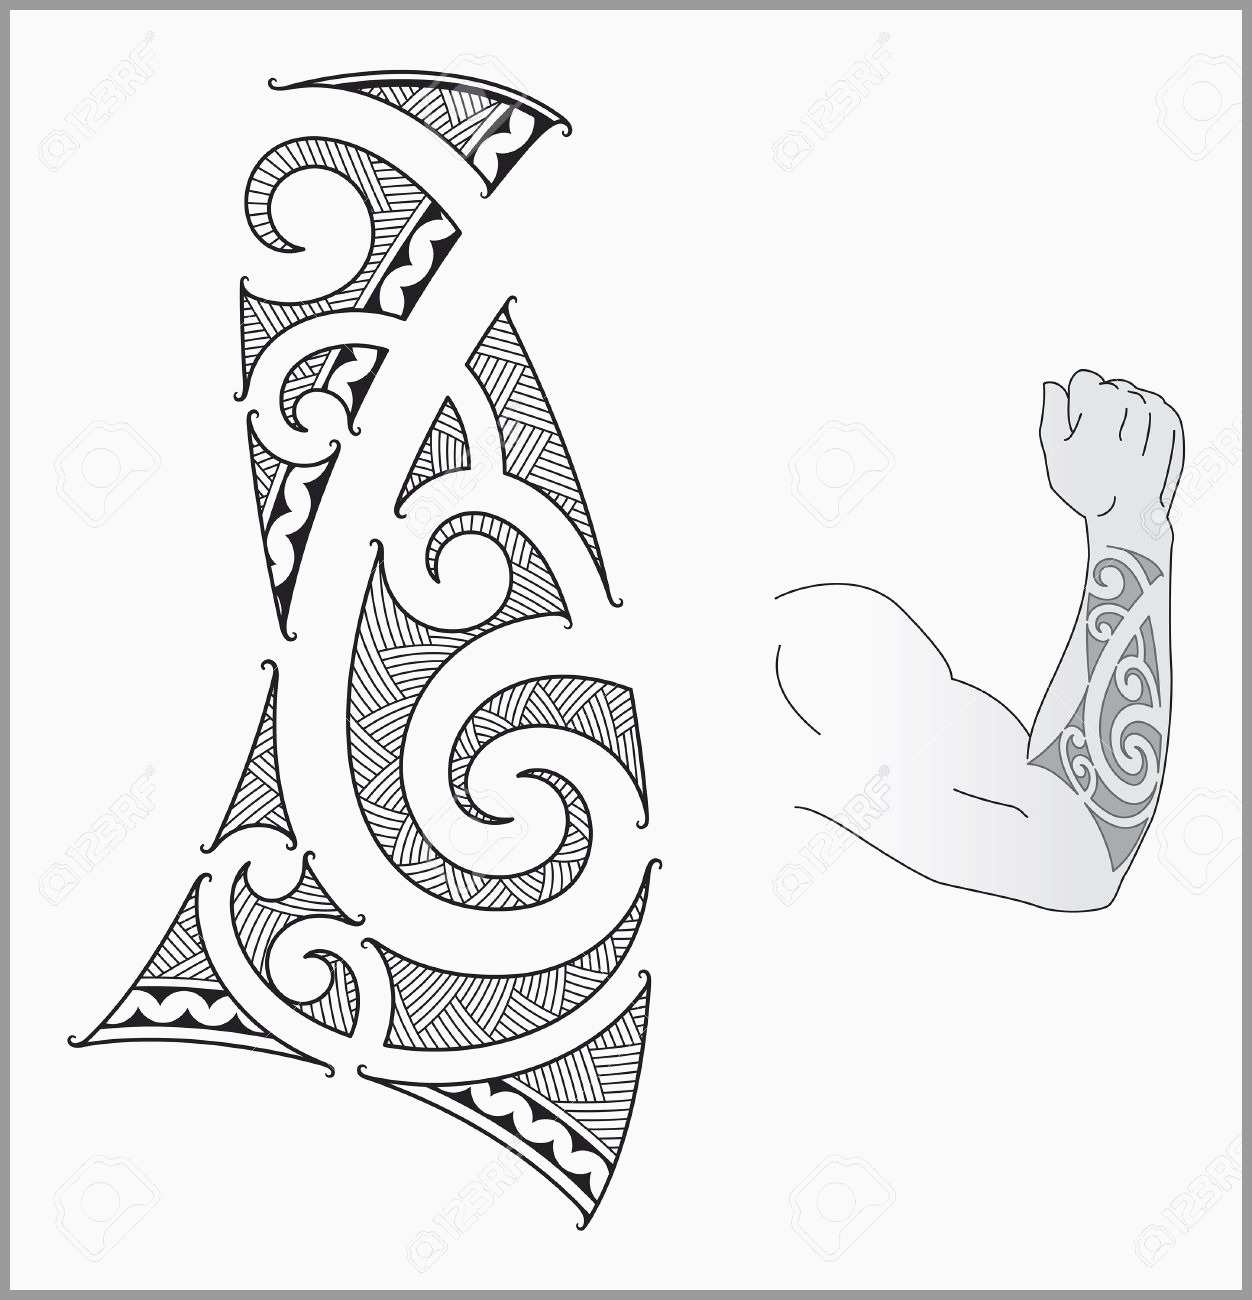 Modele tatouage tribal avant bras homme